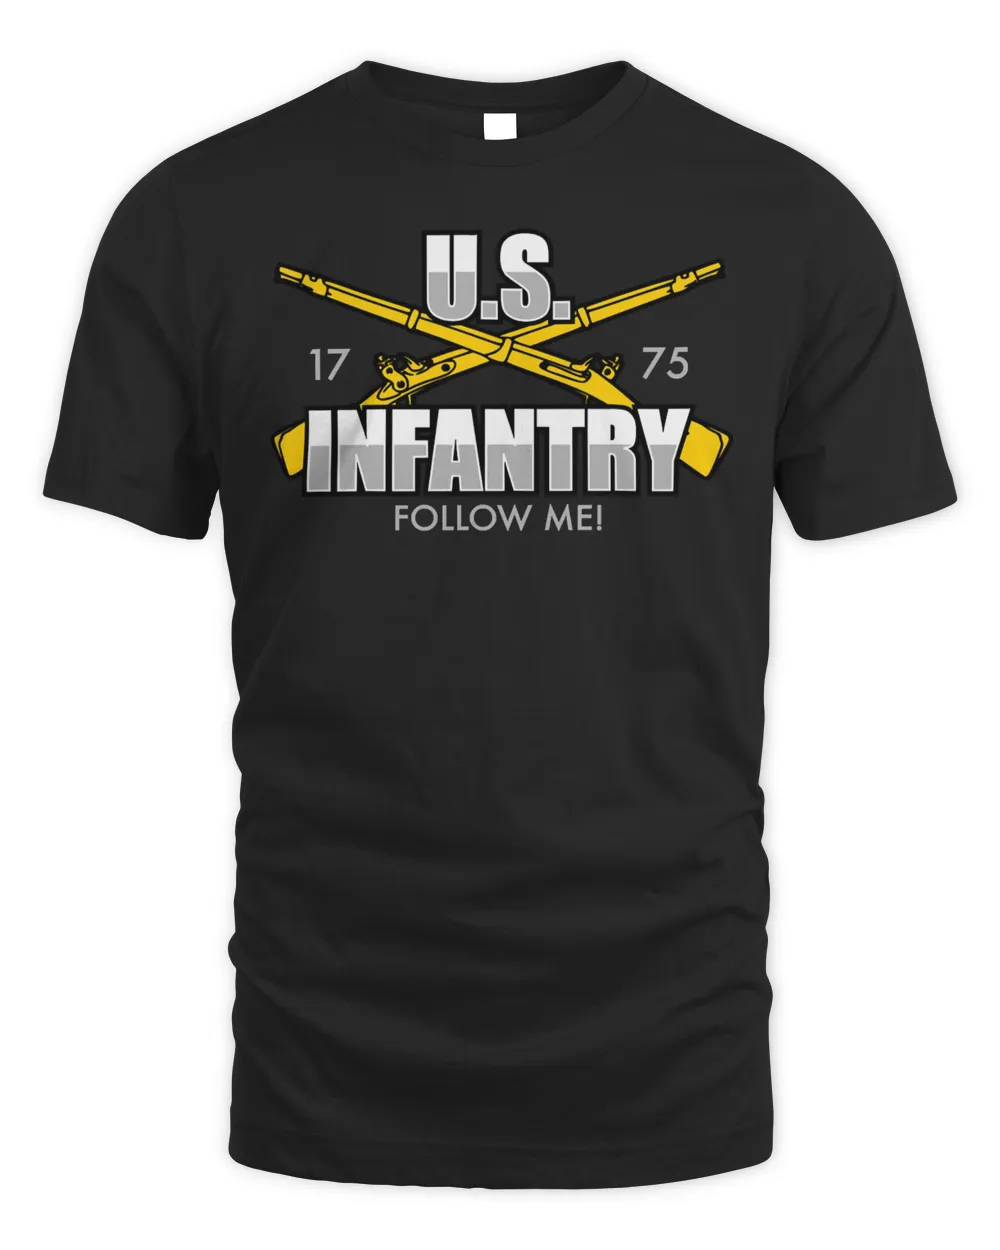 u.s. infantry t shirt